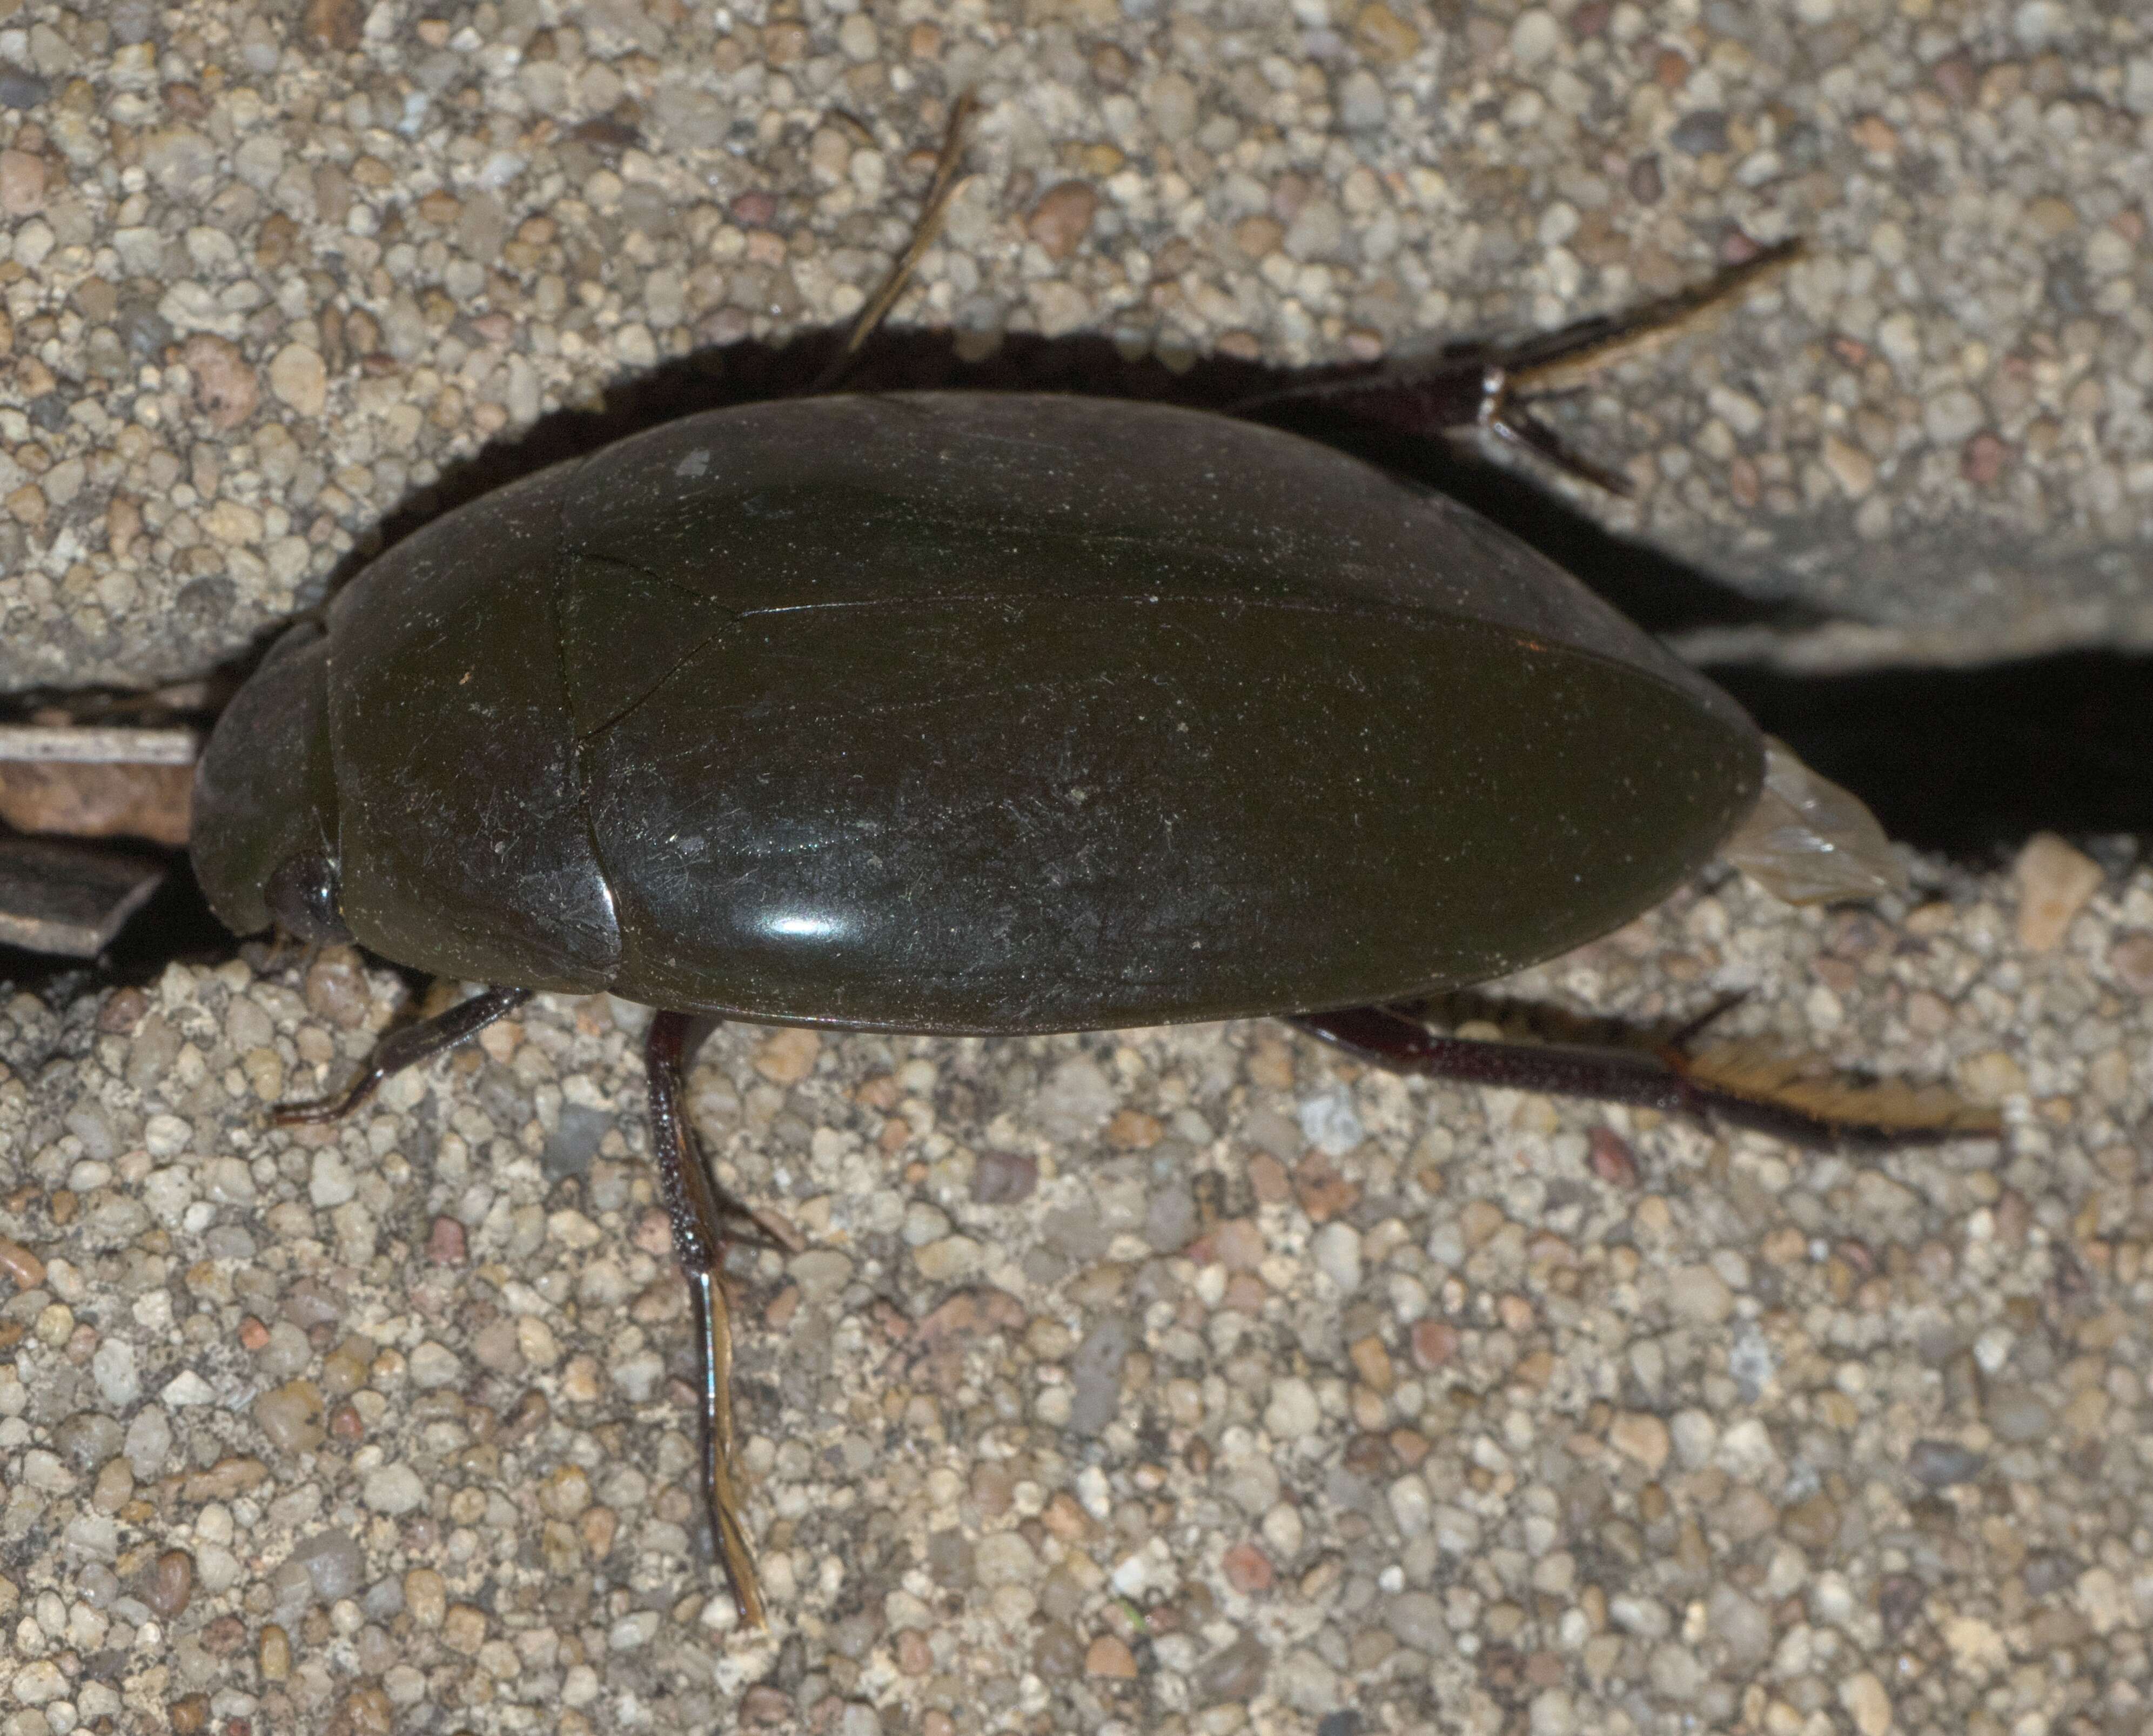 Image of Giant Black Water Beetle